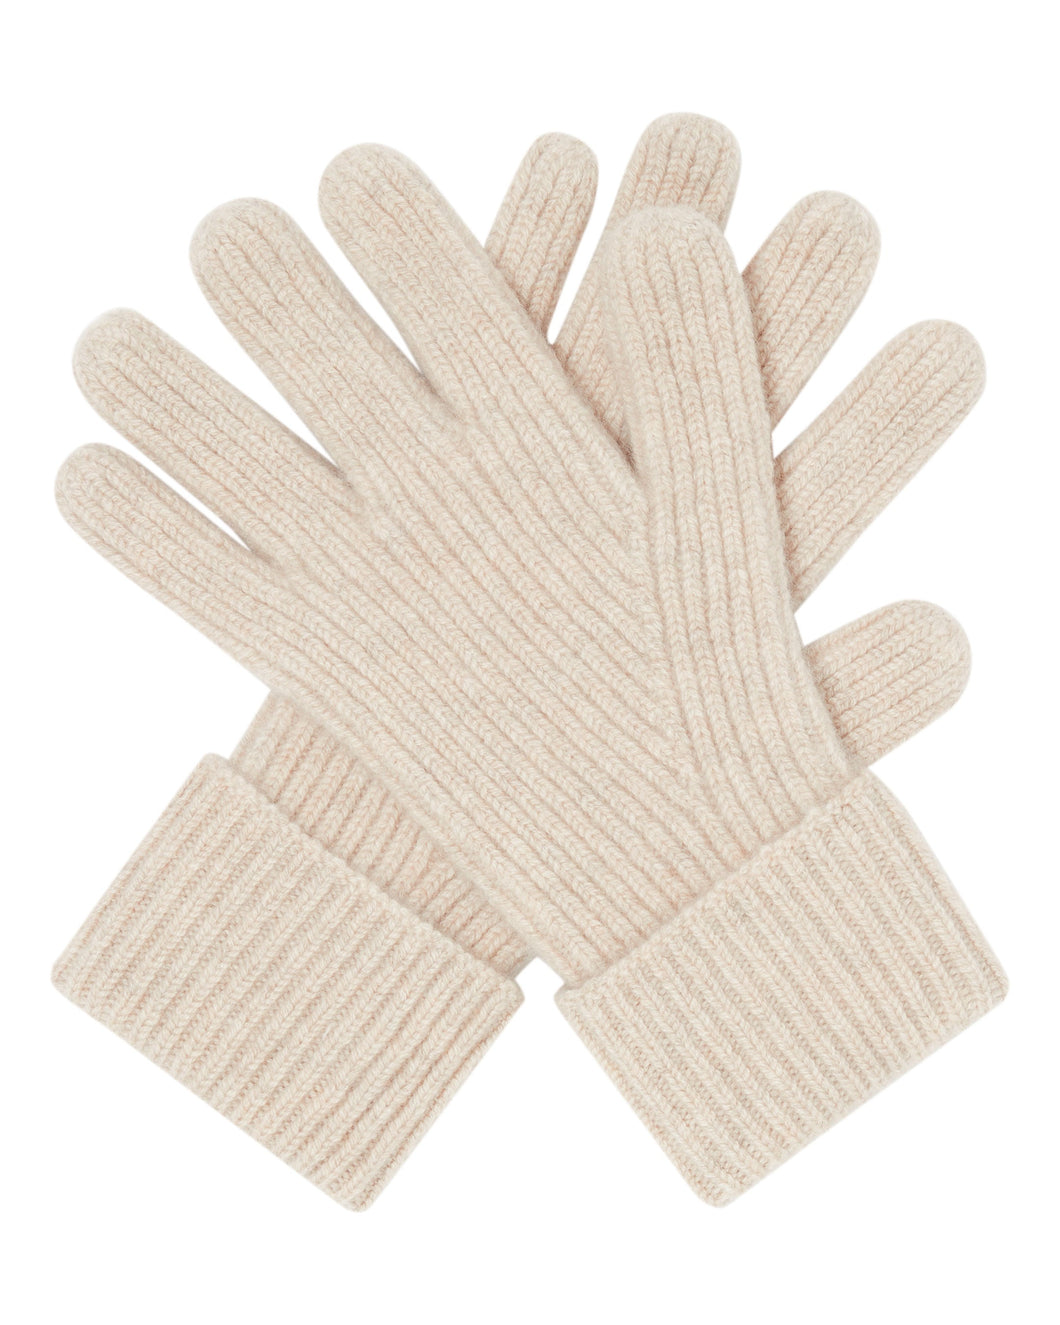 N.Peal Men's Ribbed Cashmere Gloves Heather Beige Brown